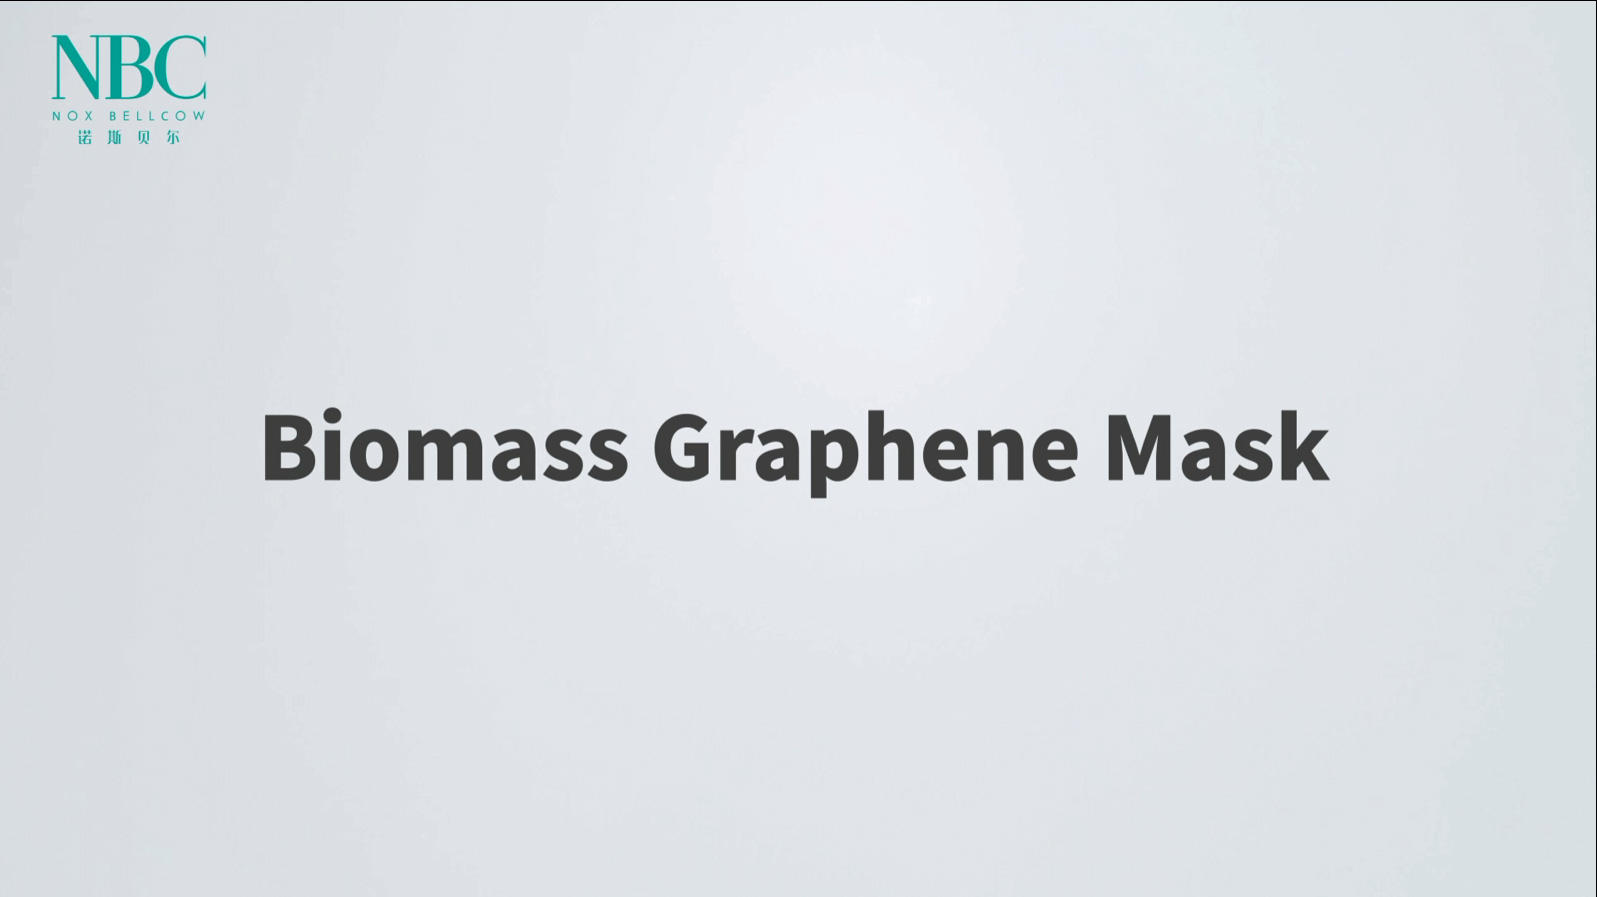 Biomass Graphene Mask